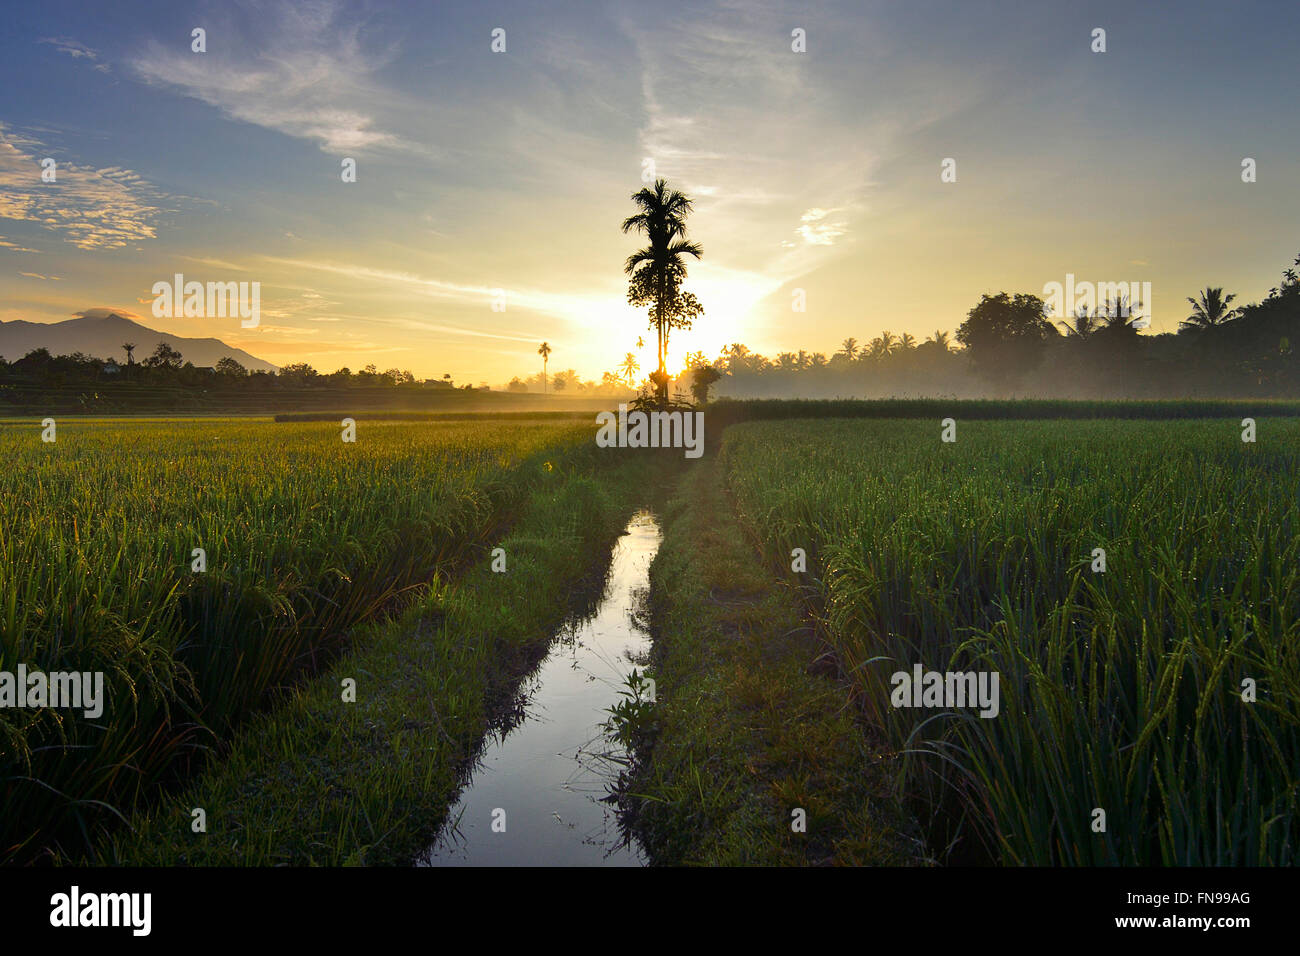 Paddy field at sunset, Tenggara, Indonesia Stock Photo